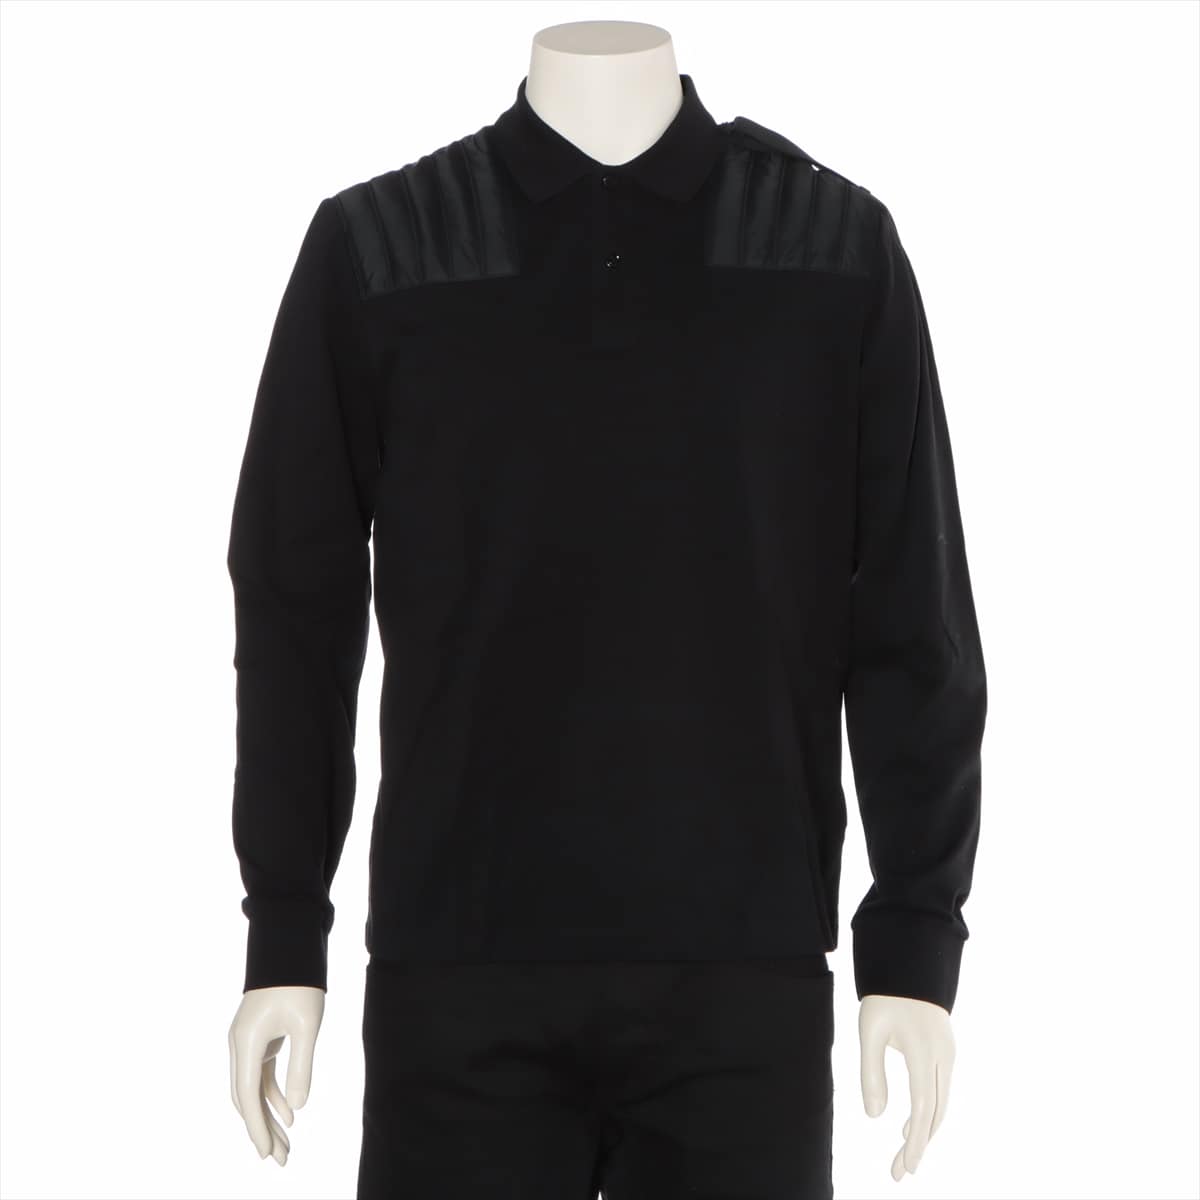 Moncler Genius Craig Green 18 years Cotton Long T shirts S Men's Black  Polo